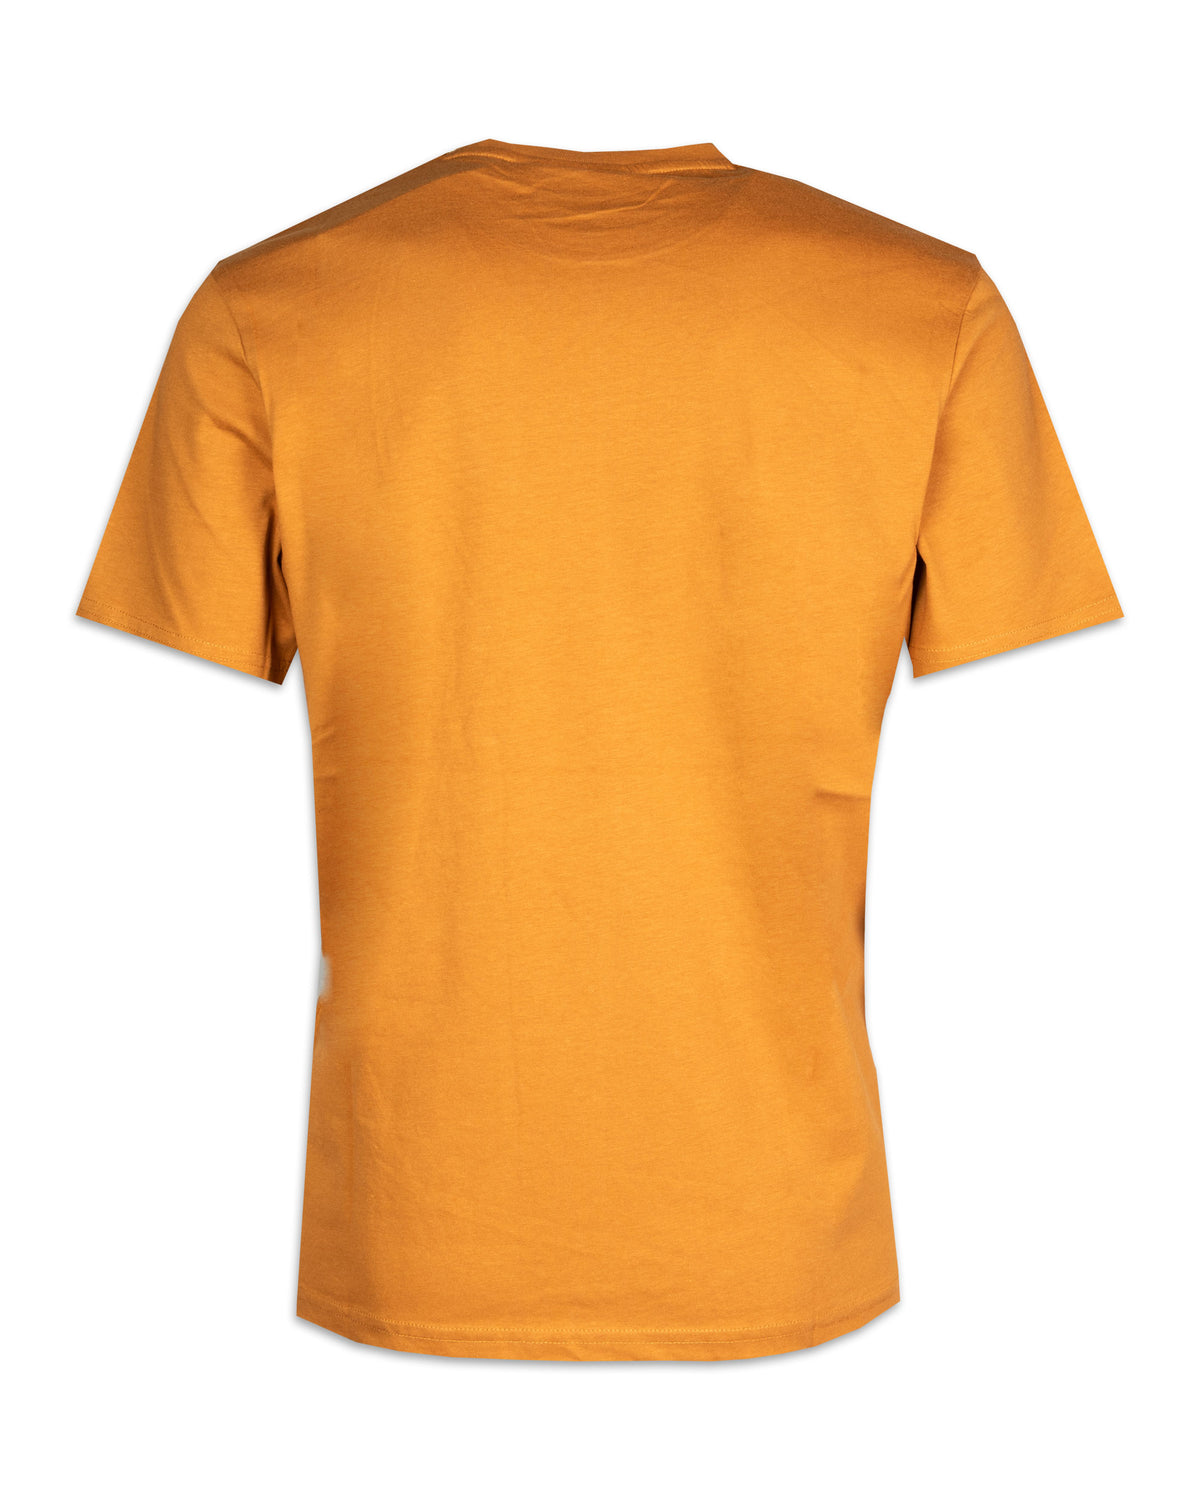 T-Shirt Uomo Lyle And Scott Classic Logo Arancione